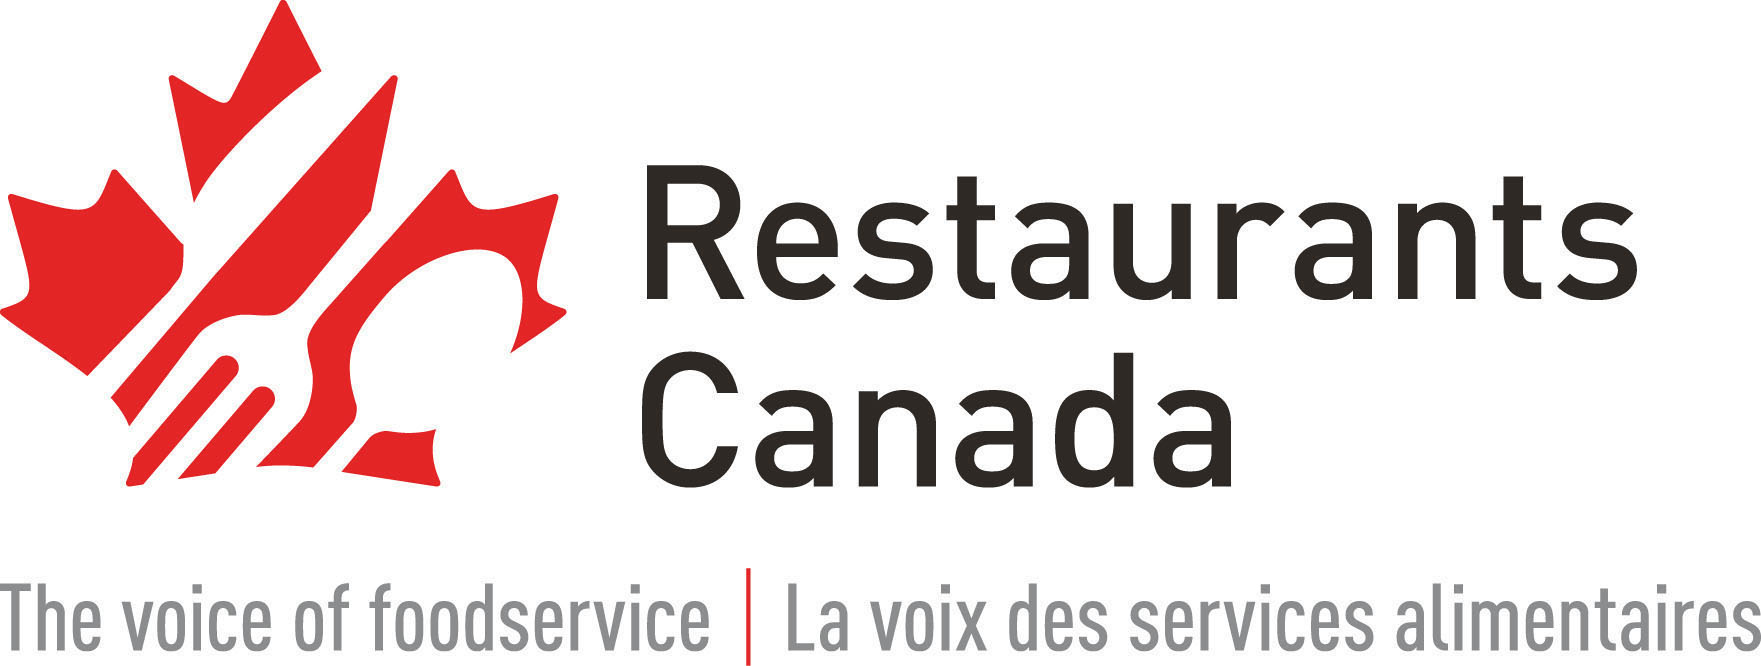 Restaurants Canada p